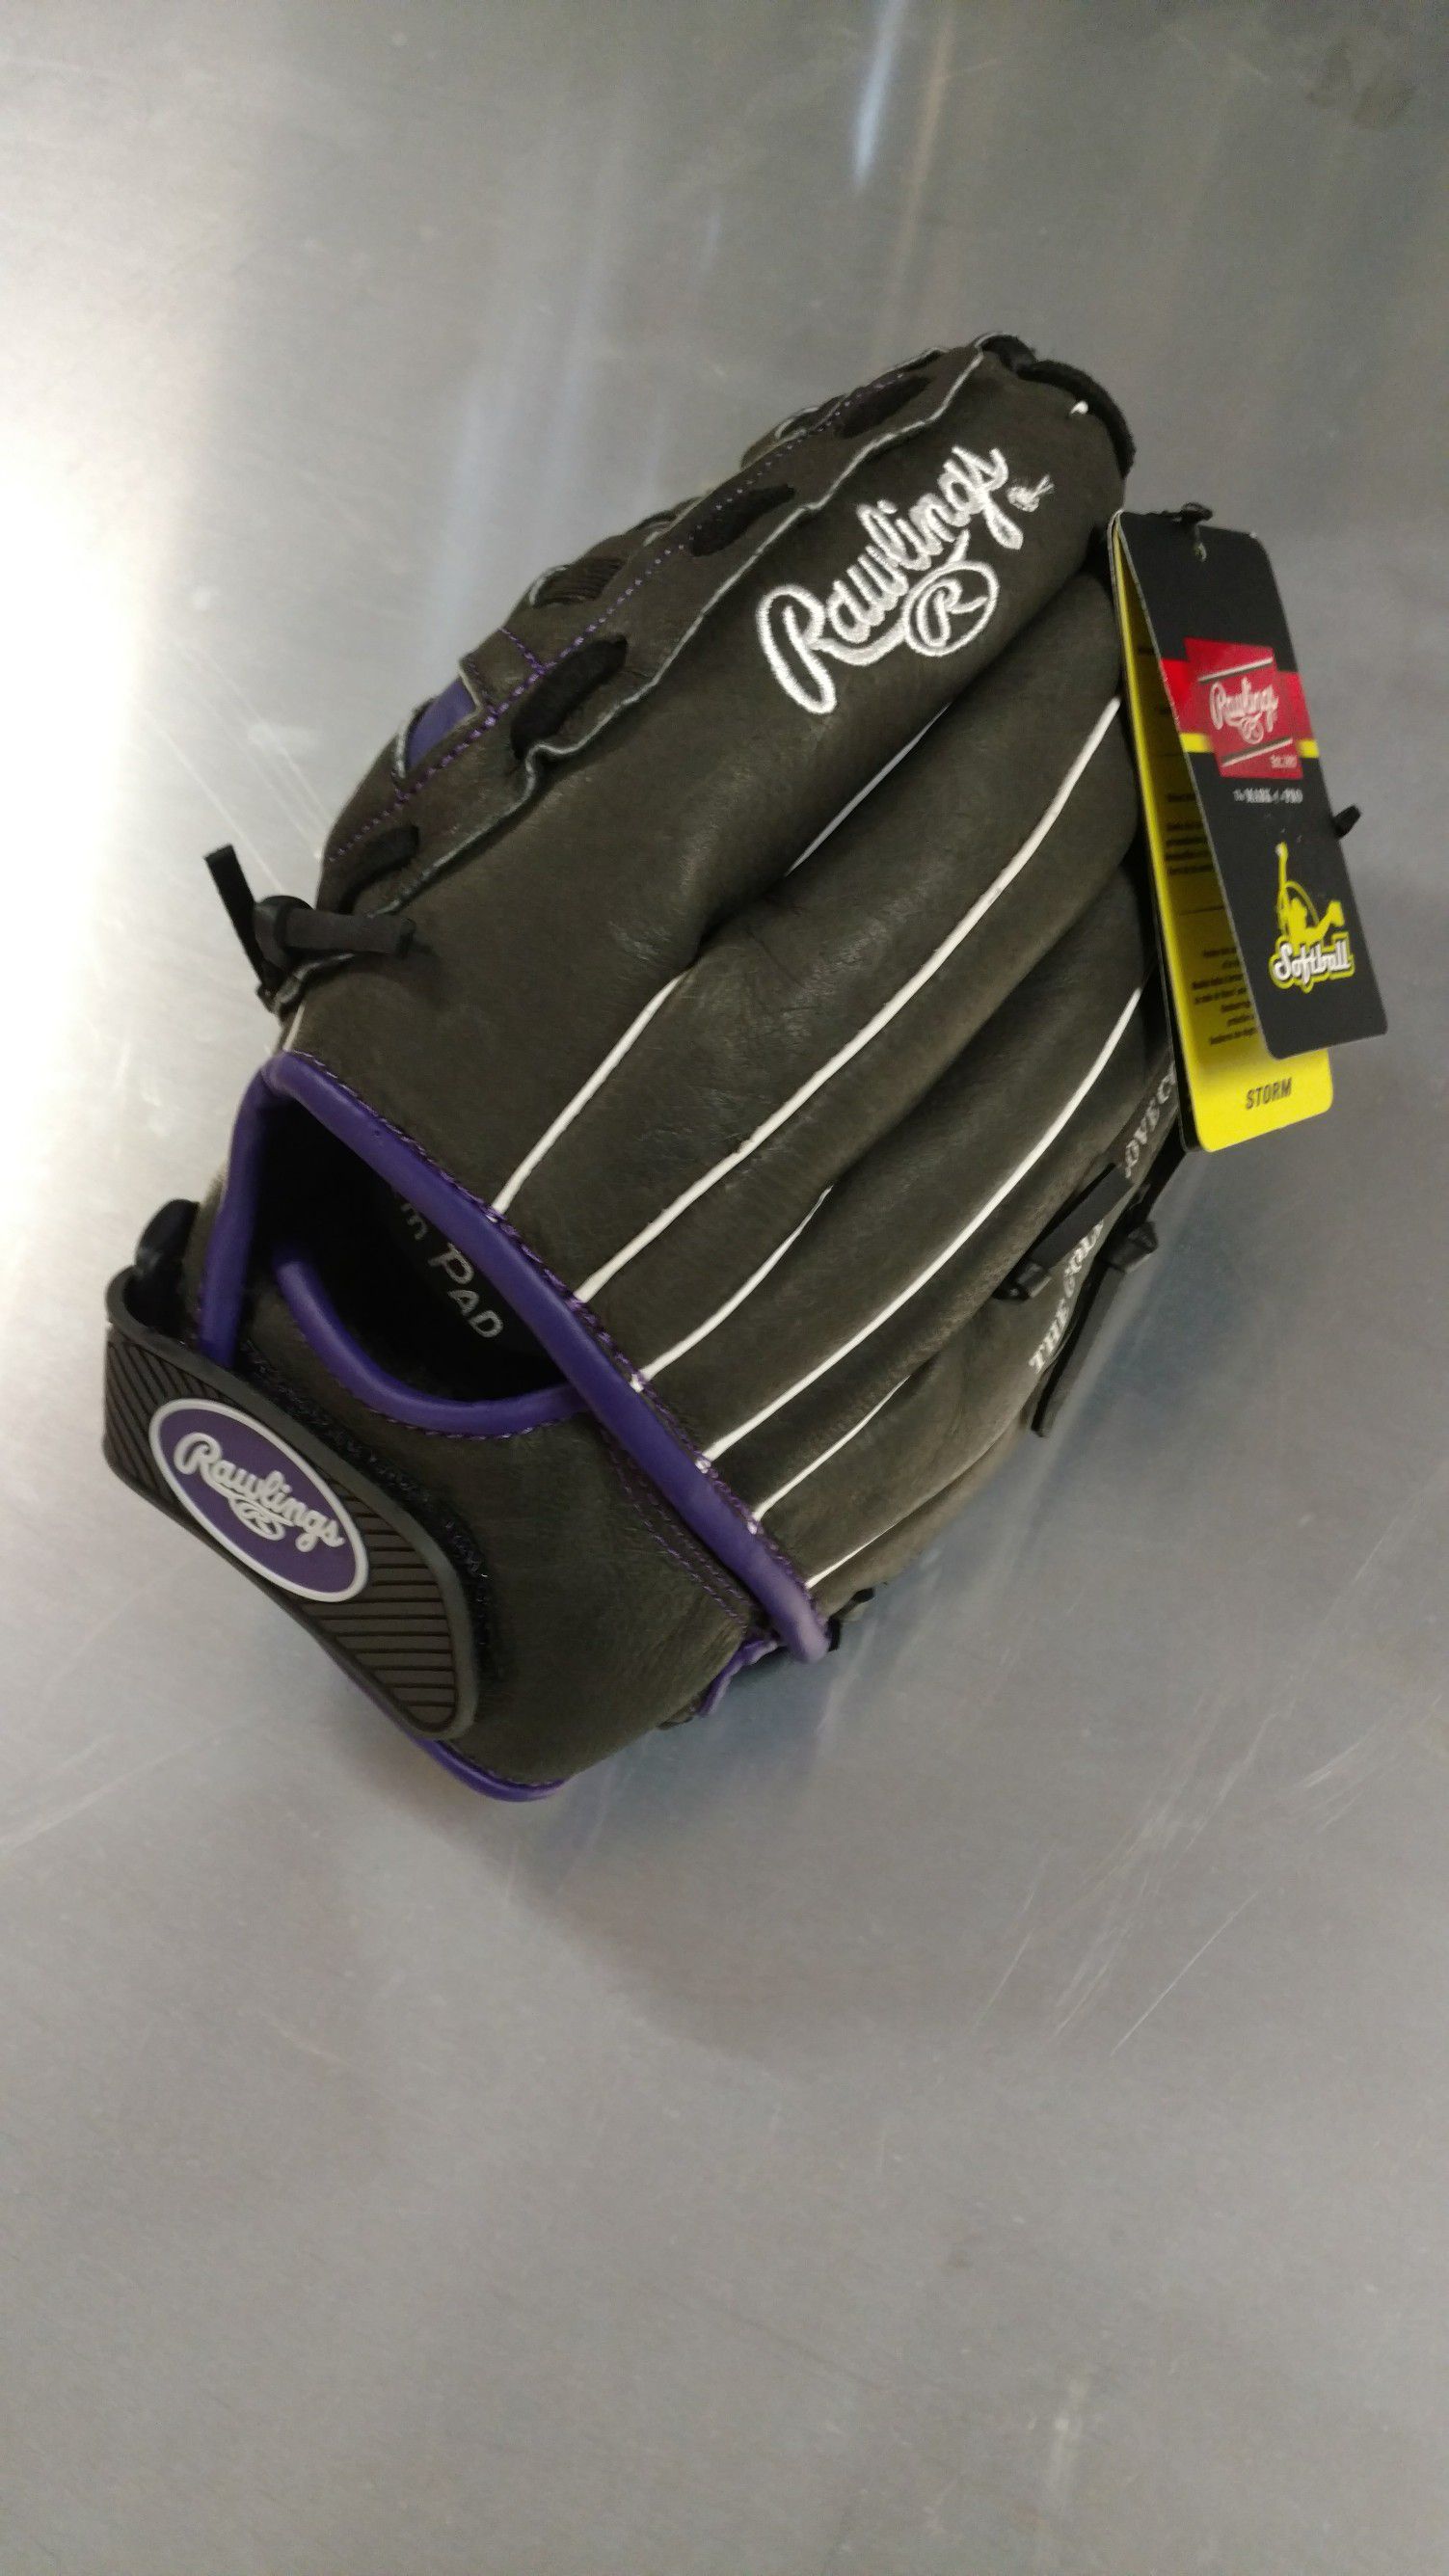 Softball baseball glove